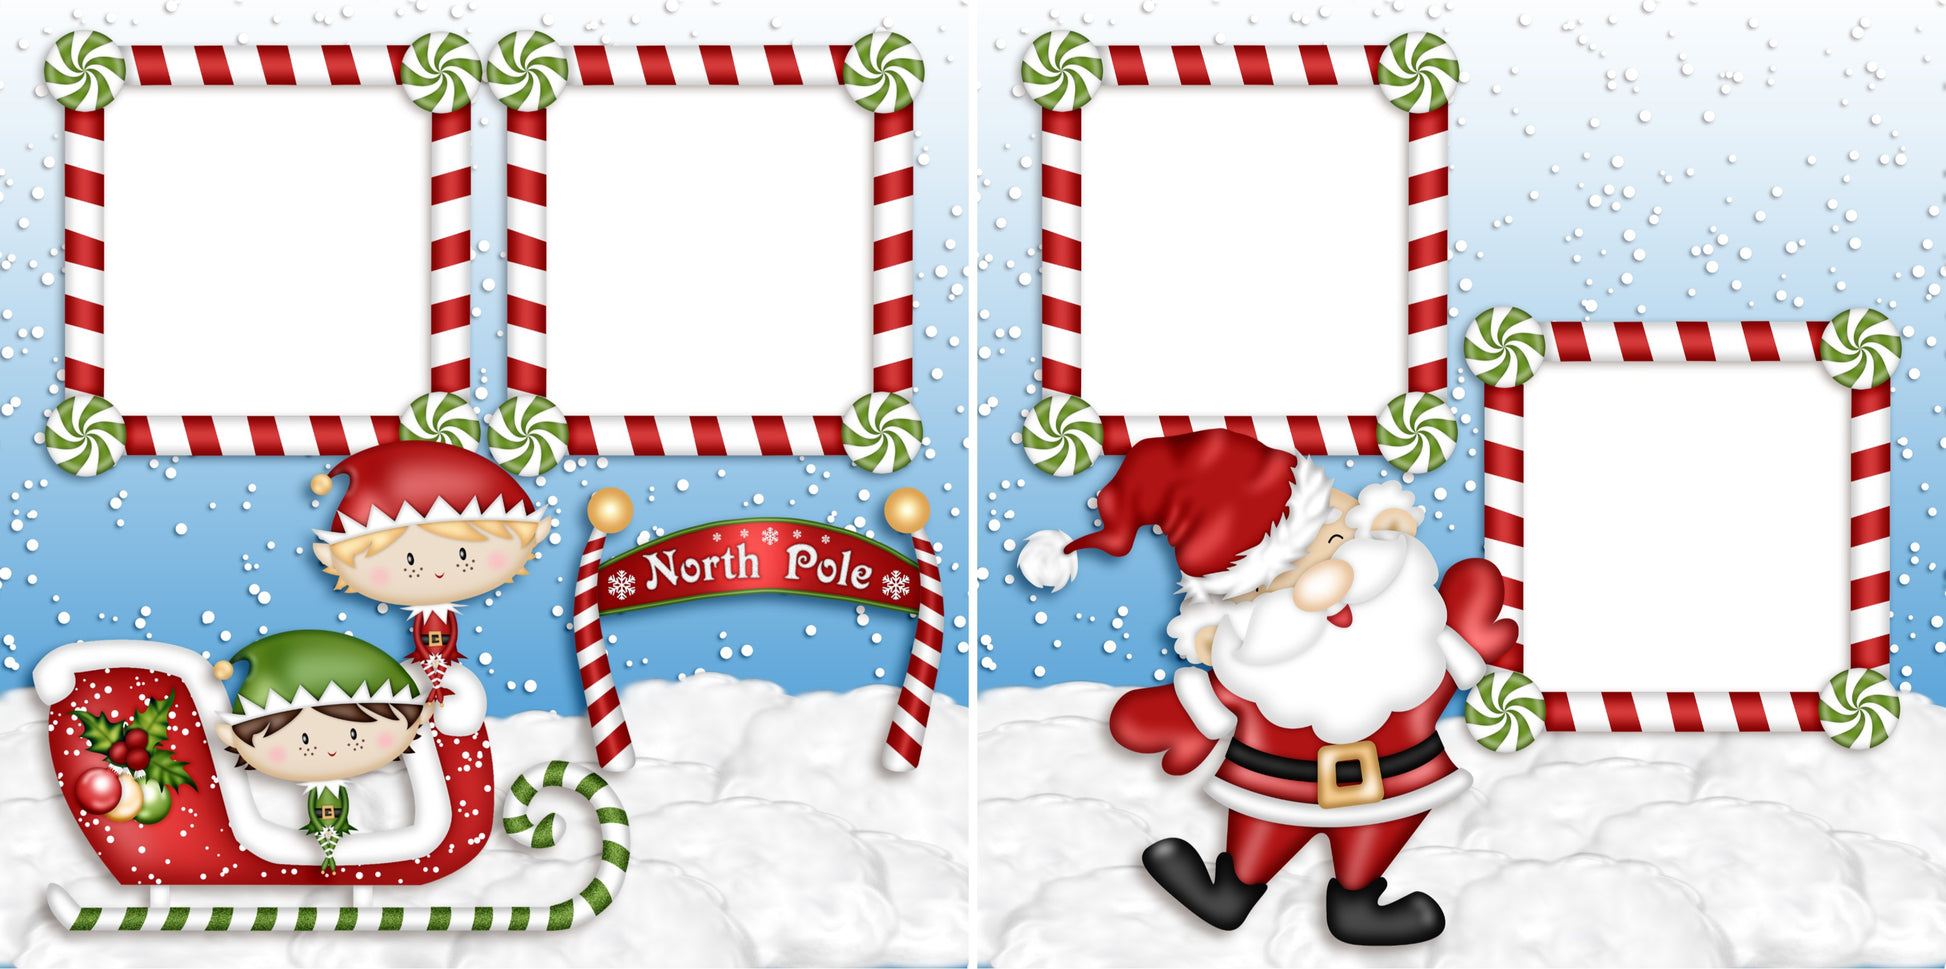 North Pole - Christmas - Digital Scrapbook Pages - INSTANT DOWNLOAD - 2019 - EZscrapbooks Scrapbook Layouts Christmas